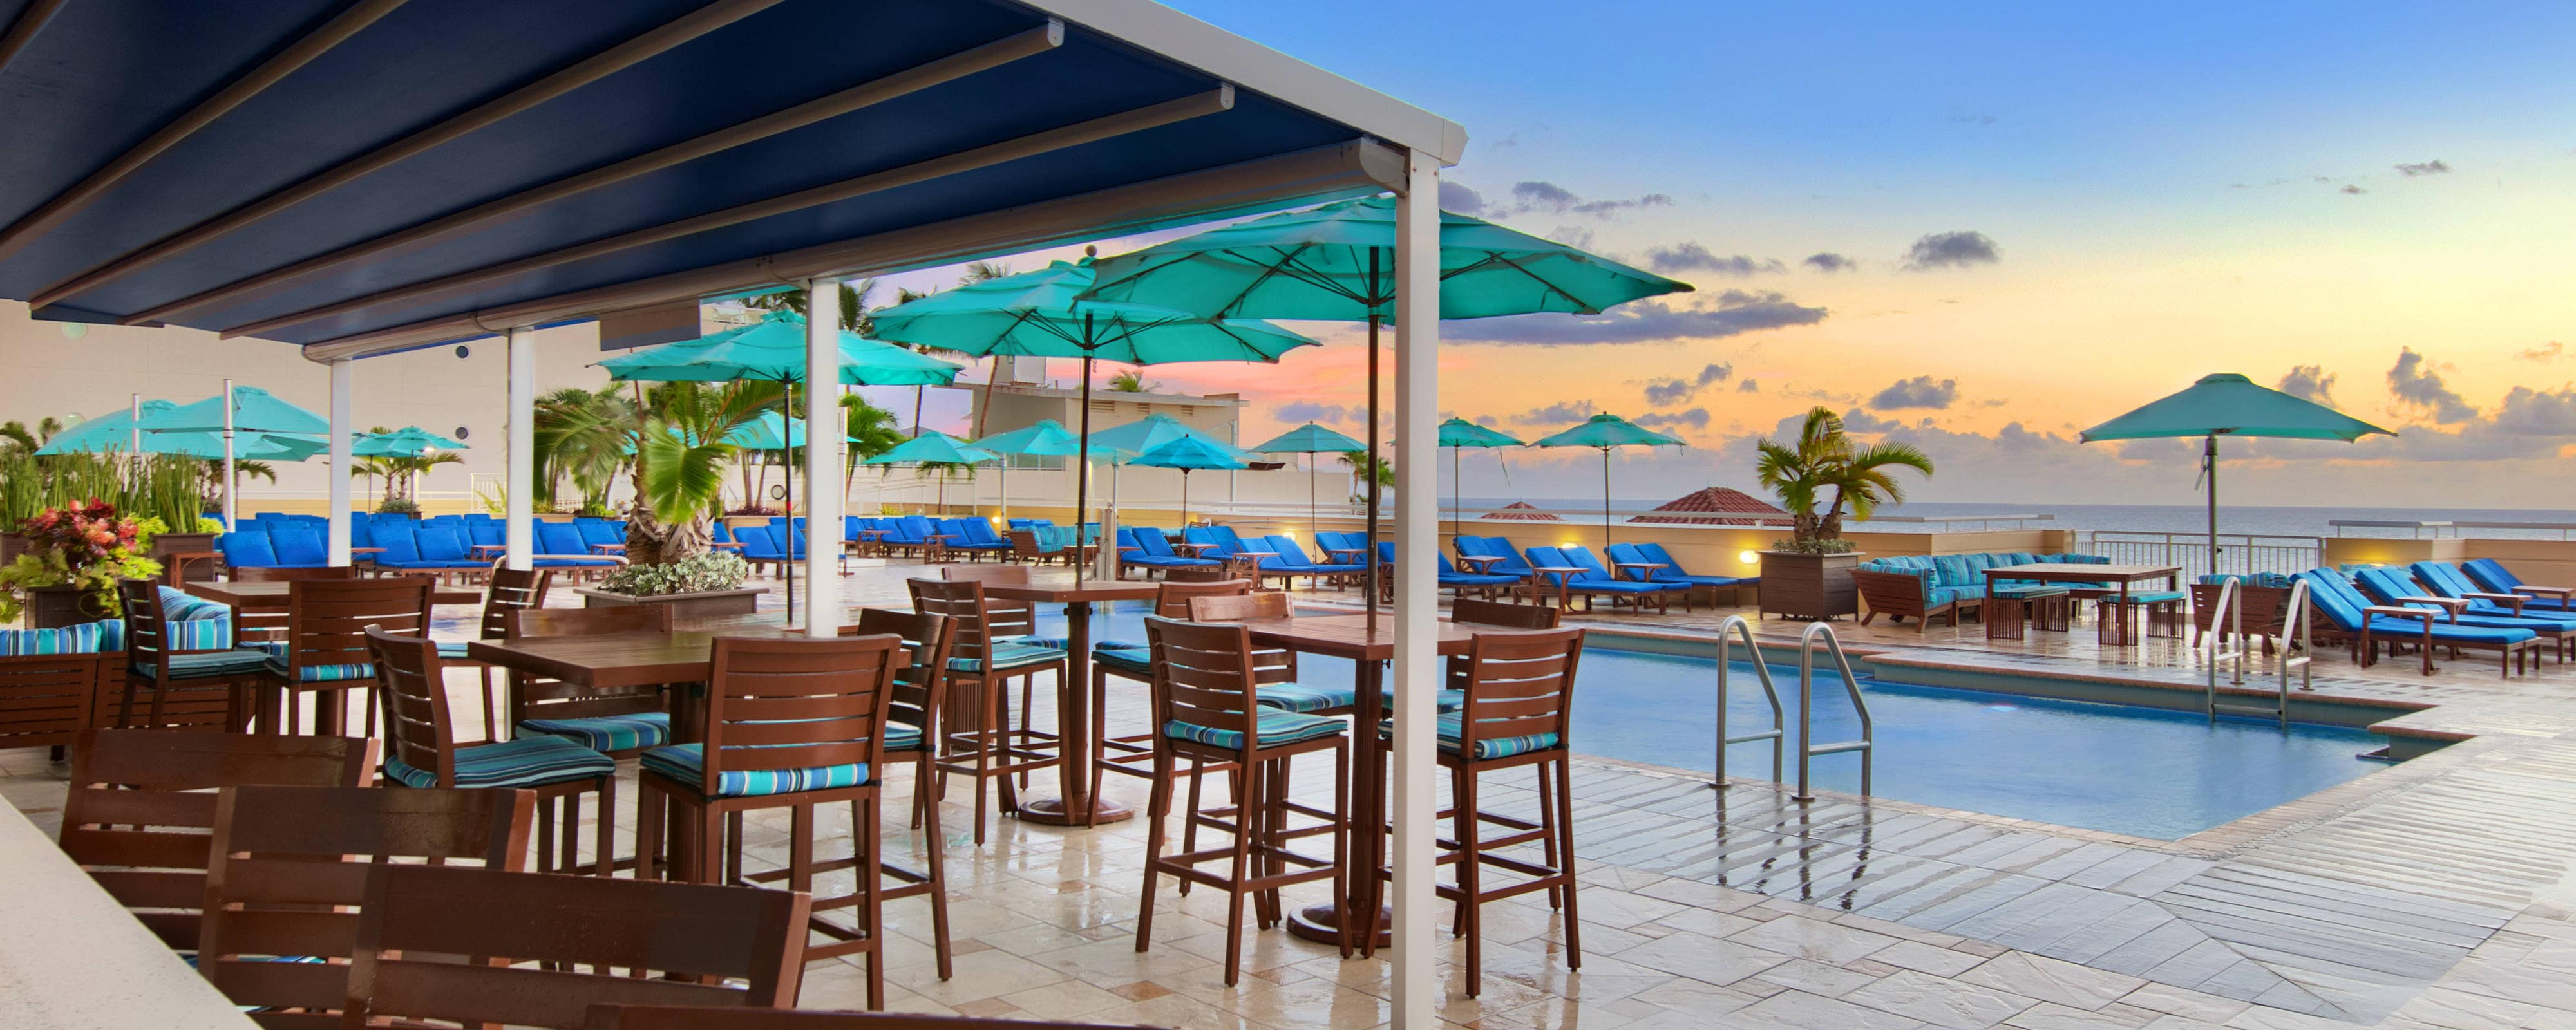 Pool Bar Fort Lauderdale  Poolside Dining  Marriotts 